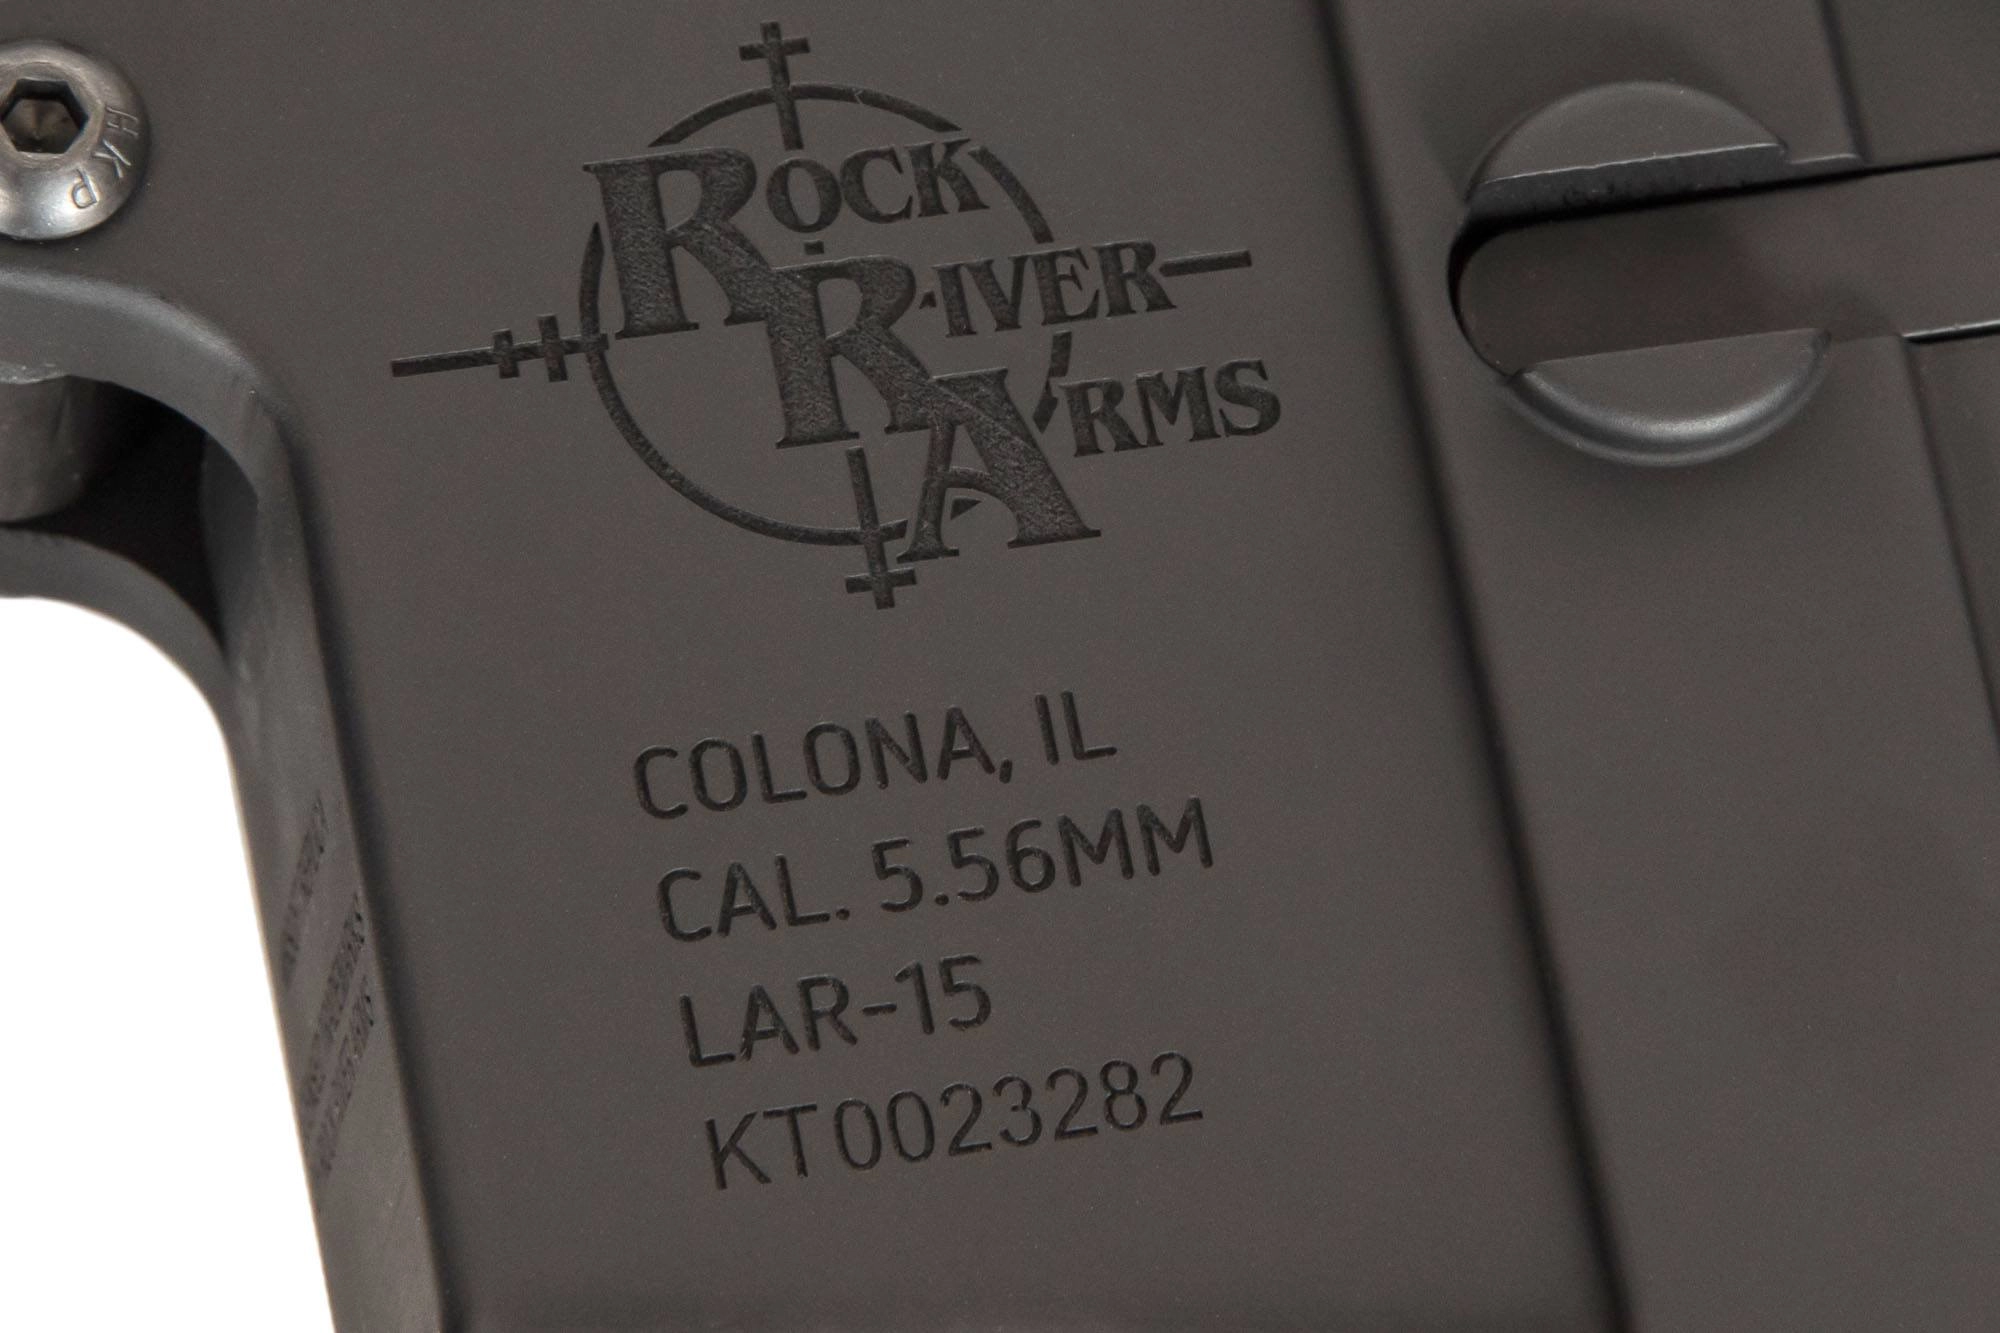 SPECNA ARMS AEG Rifle Edge 2.0 RRA SA-E05